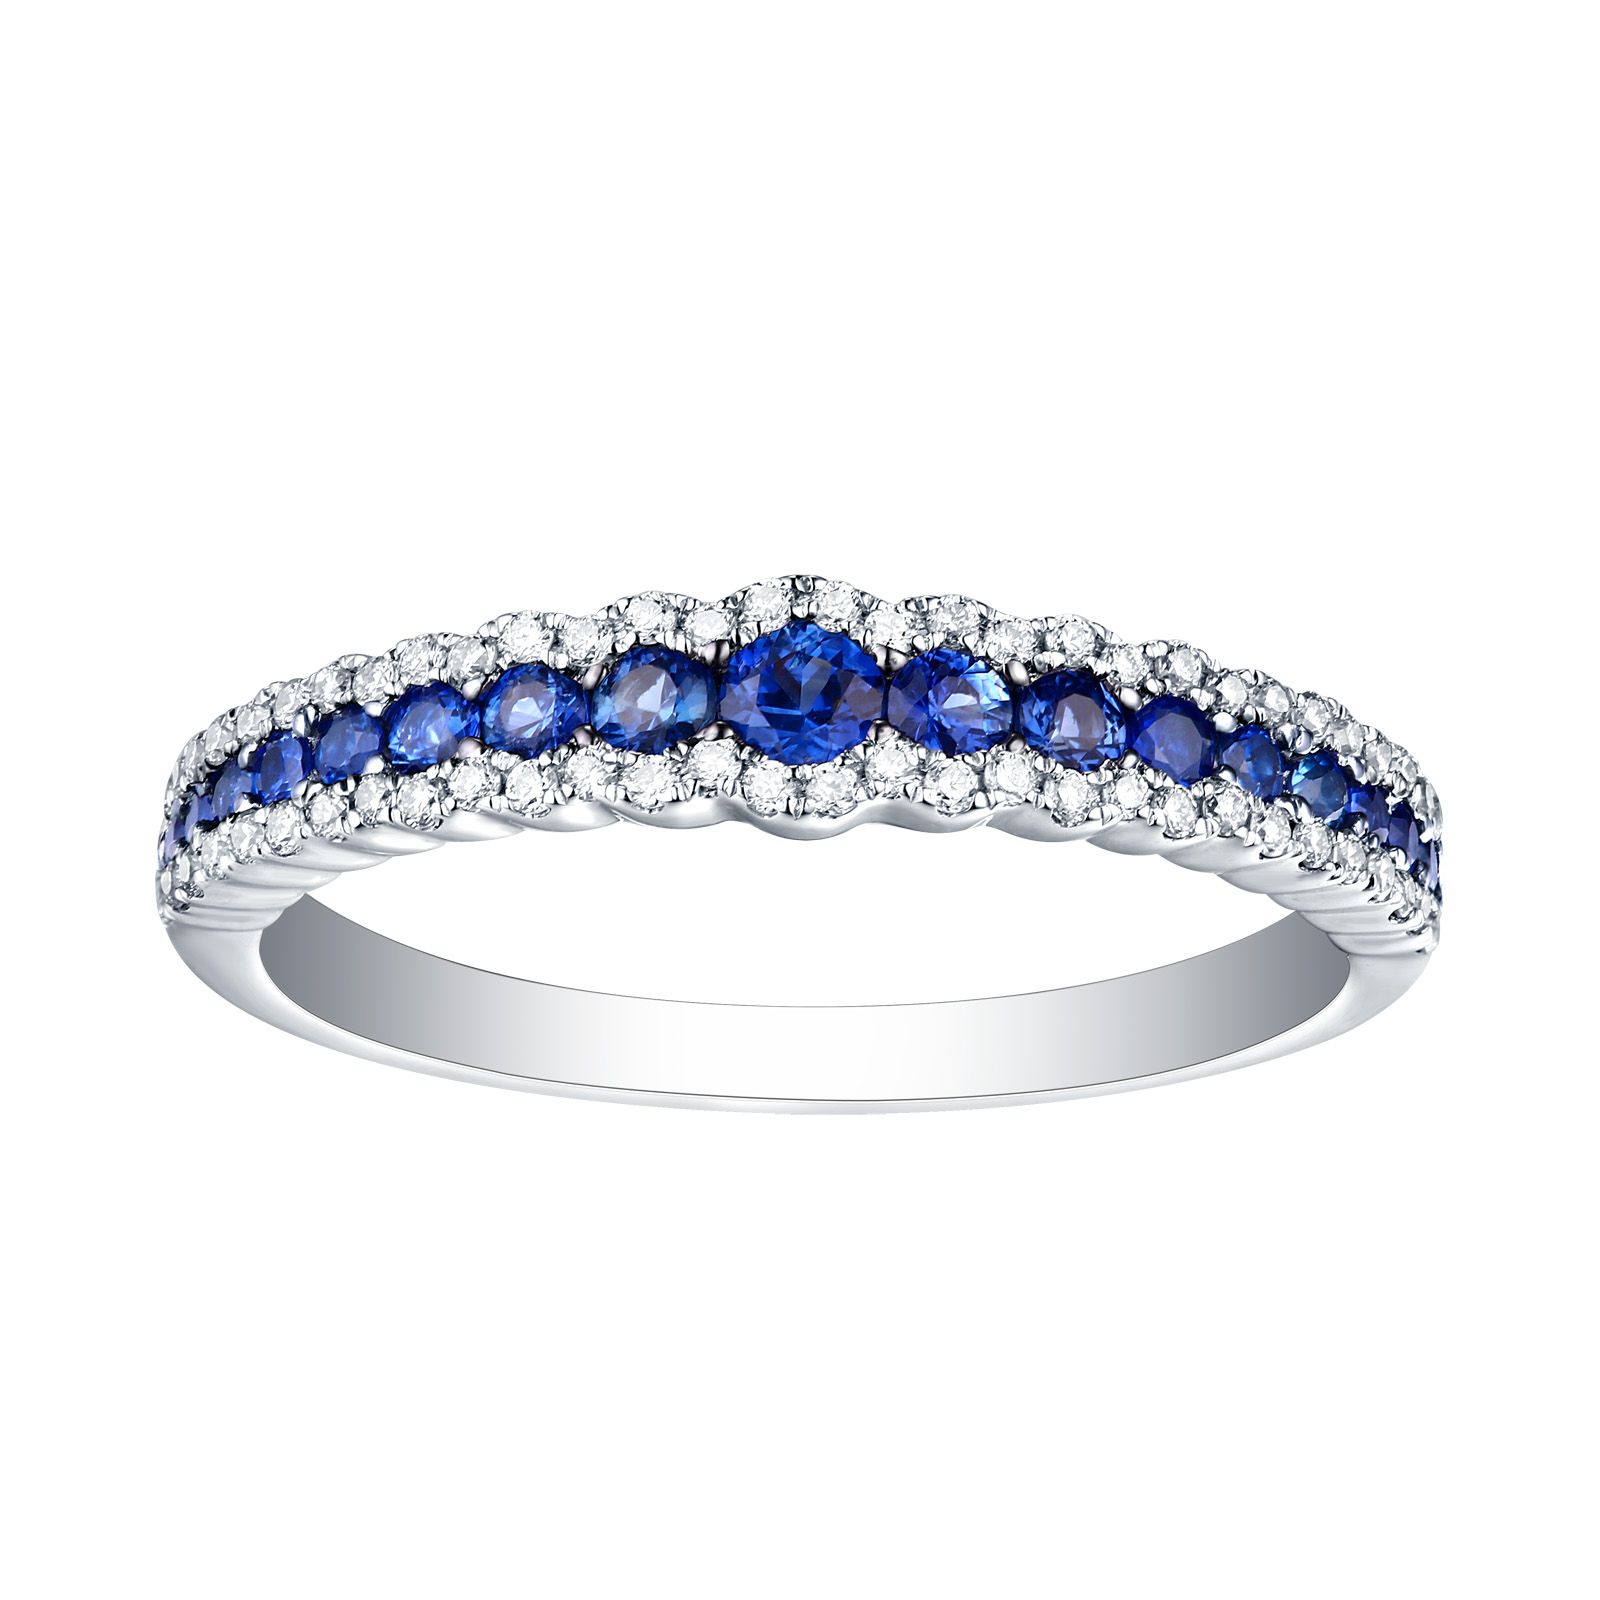 R22808BSA – 14K White Gold Blue Sapphire and Diamond Ring, 0.64 TCW